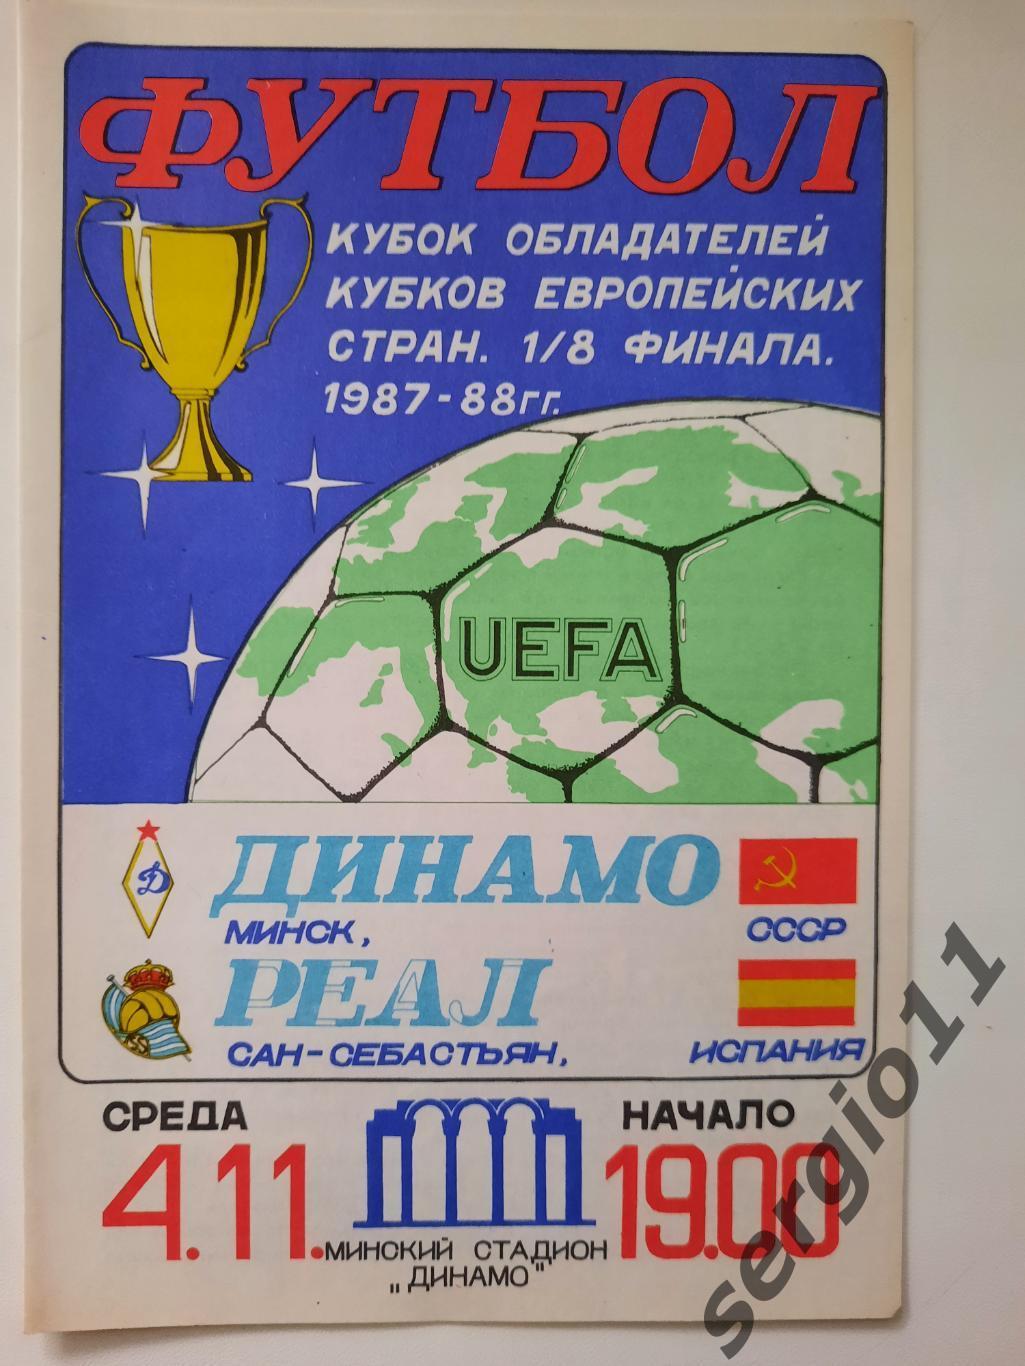 Динамо Минск - Реал Сан-Себастьян Испания 4.11.1987 г. 1/8 финала Кубка Кубков